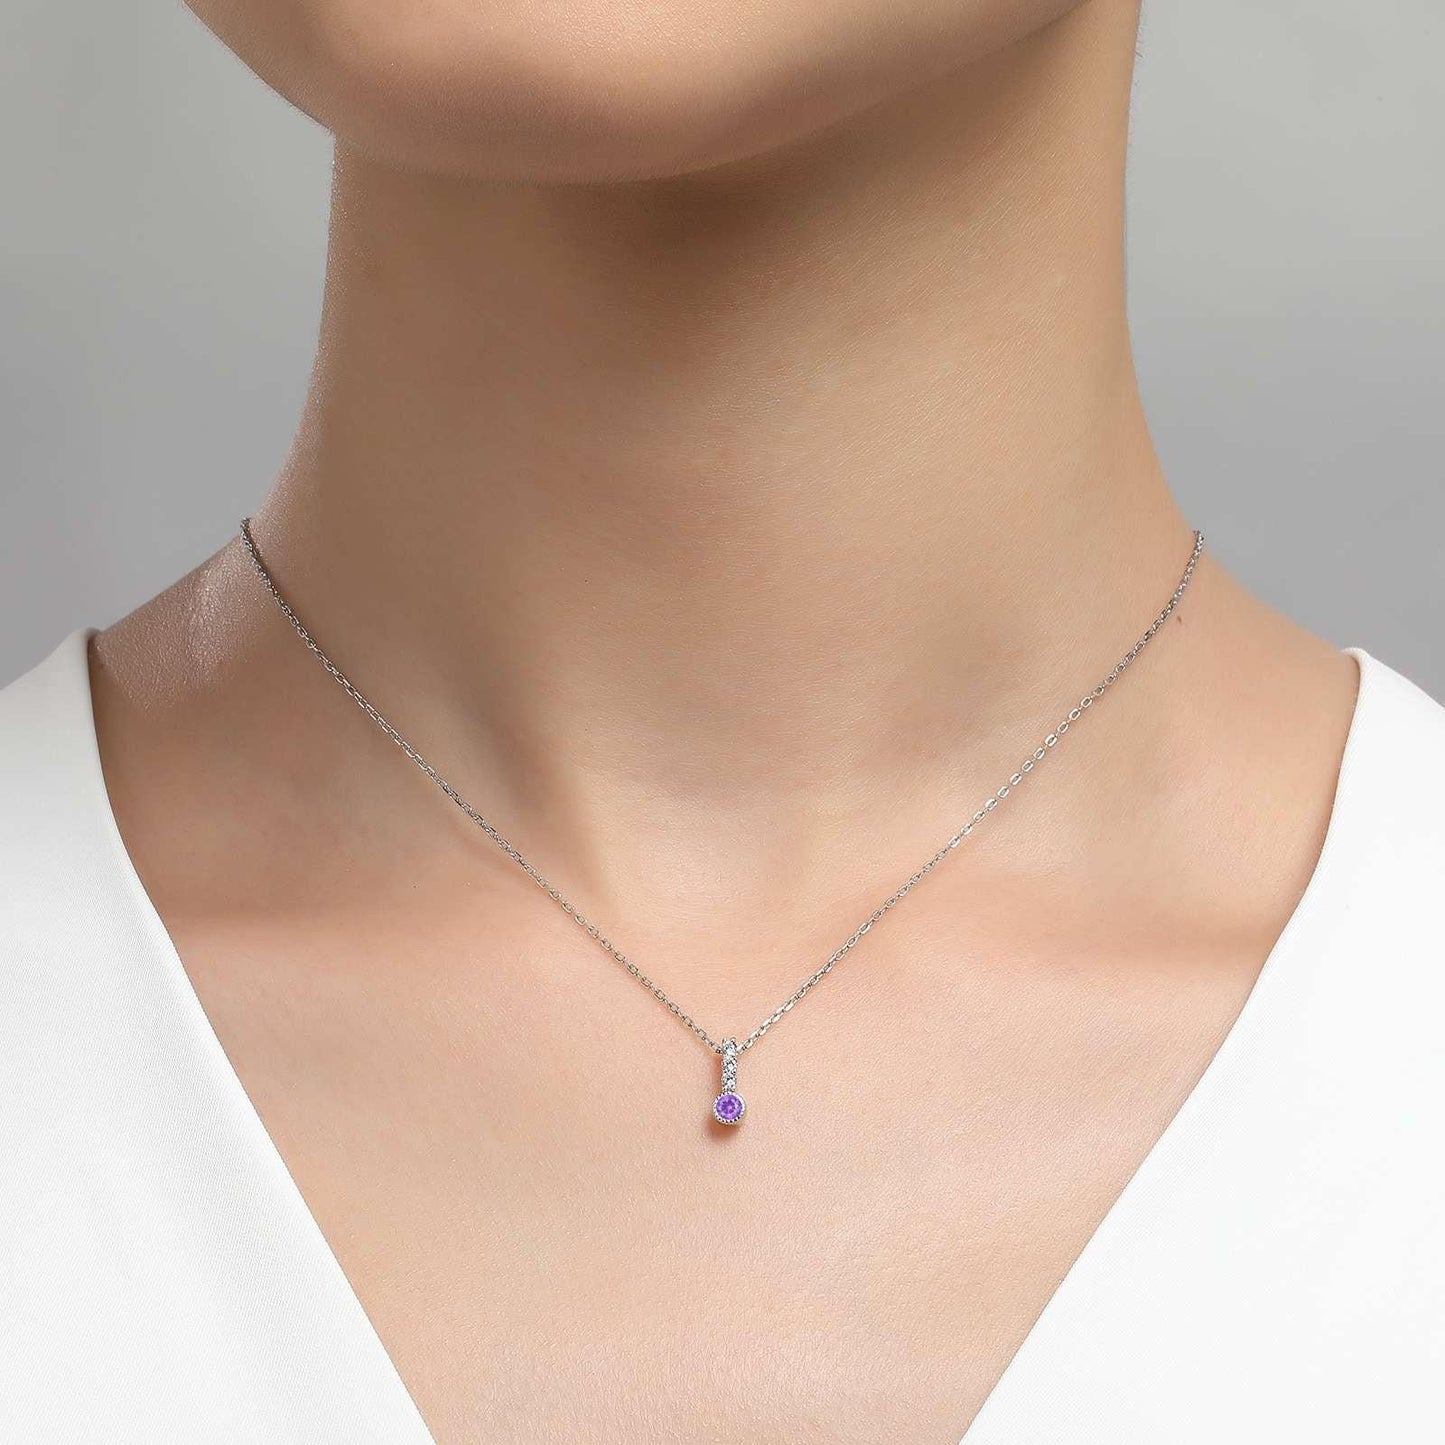 February Birthstone Love Pendant - Warwick Jewelers